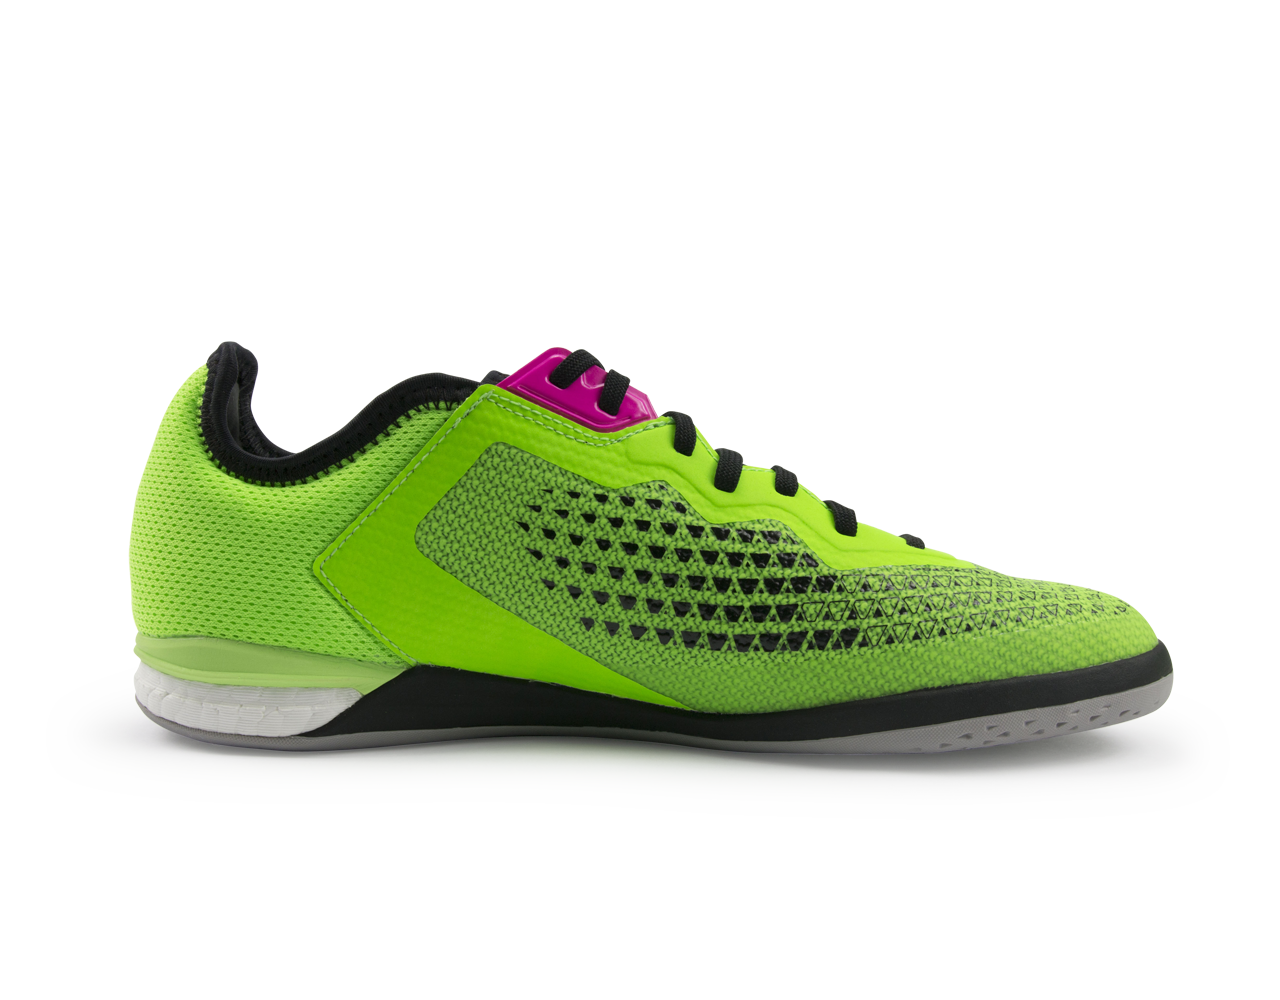 adidas Men's ACE 16.1 Court Soccer Shoes Solar Green/Black/Night Metallic